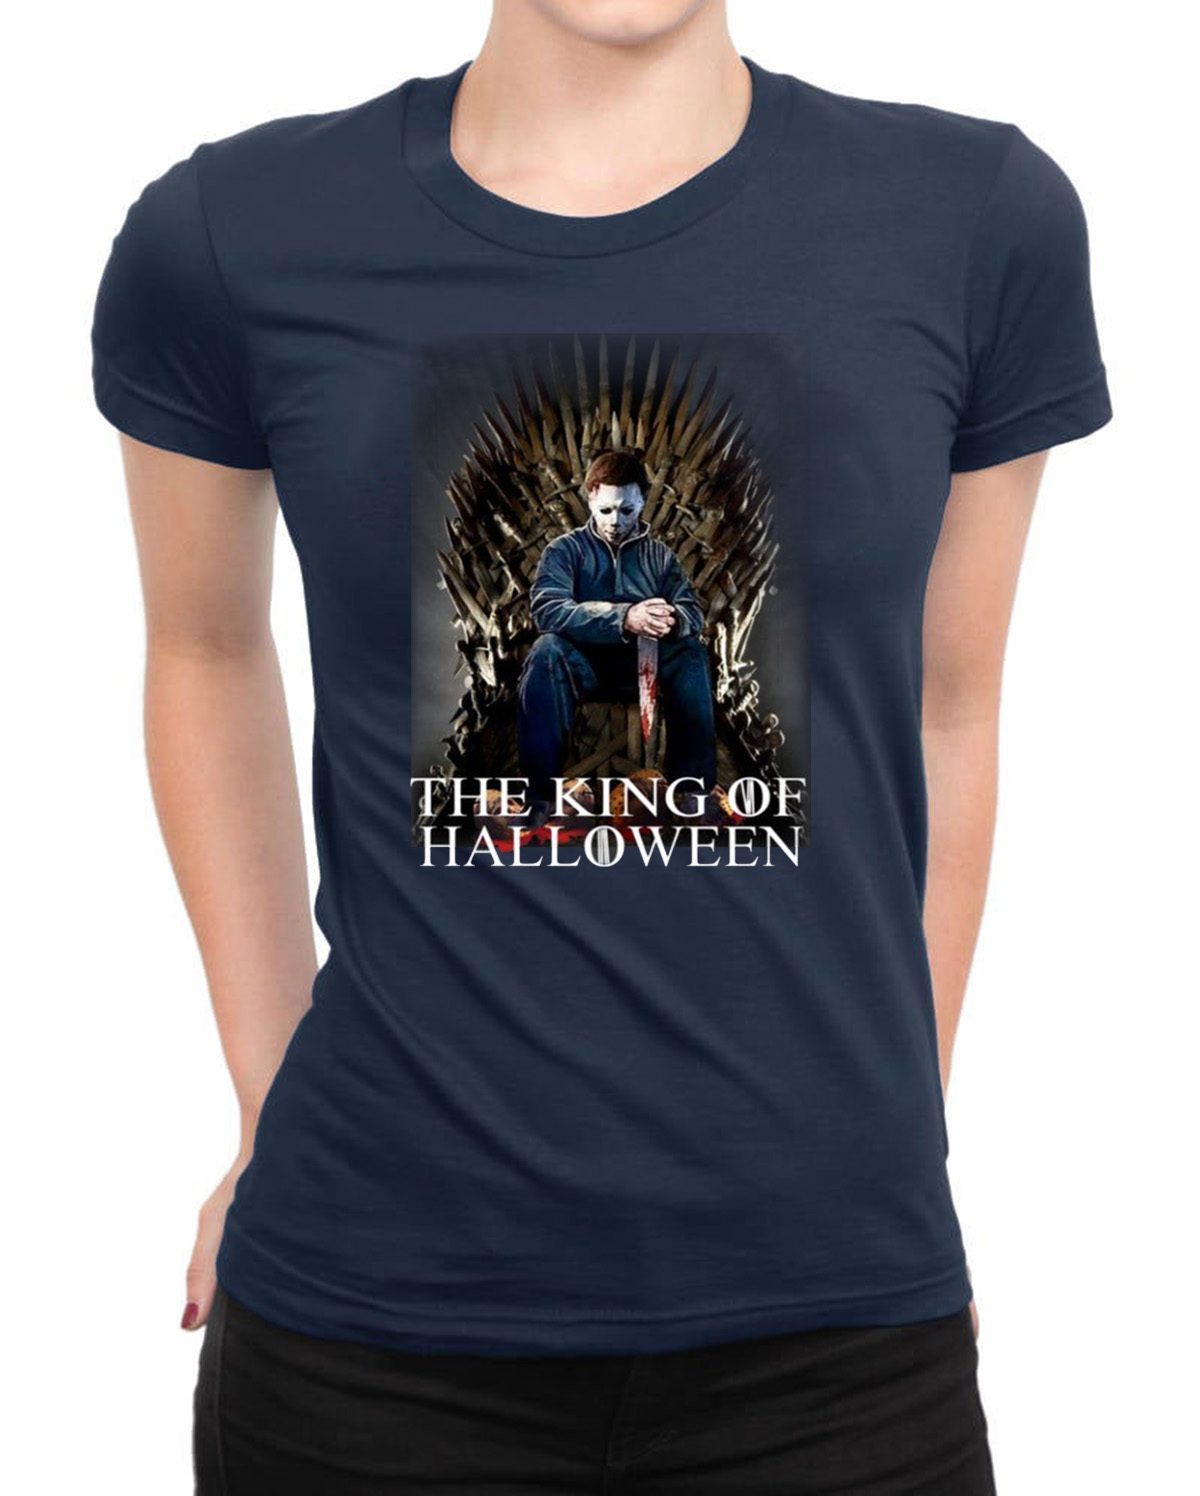 Michael Myers The King Of Halloween shirt